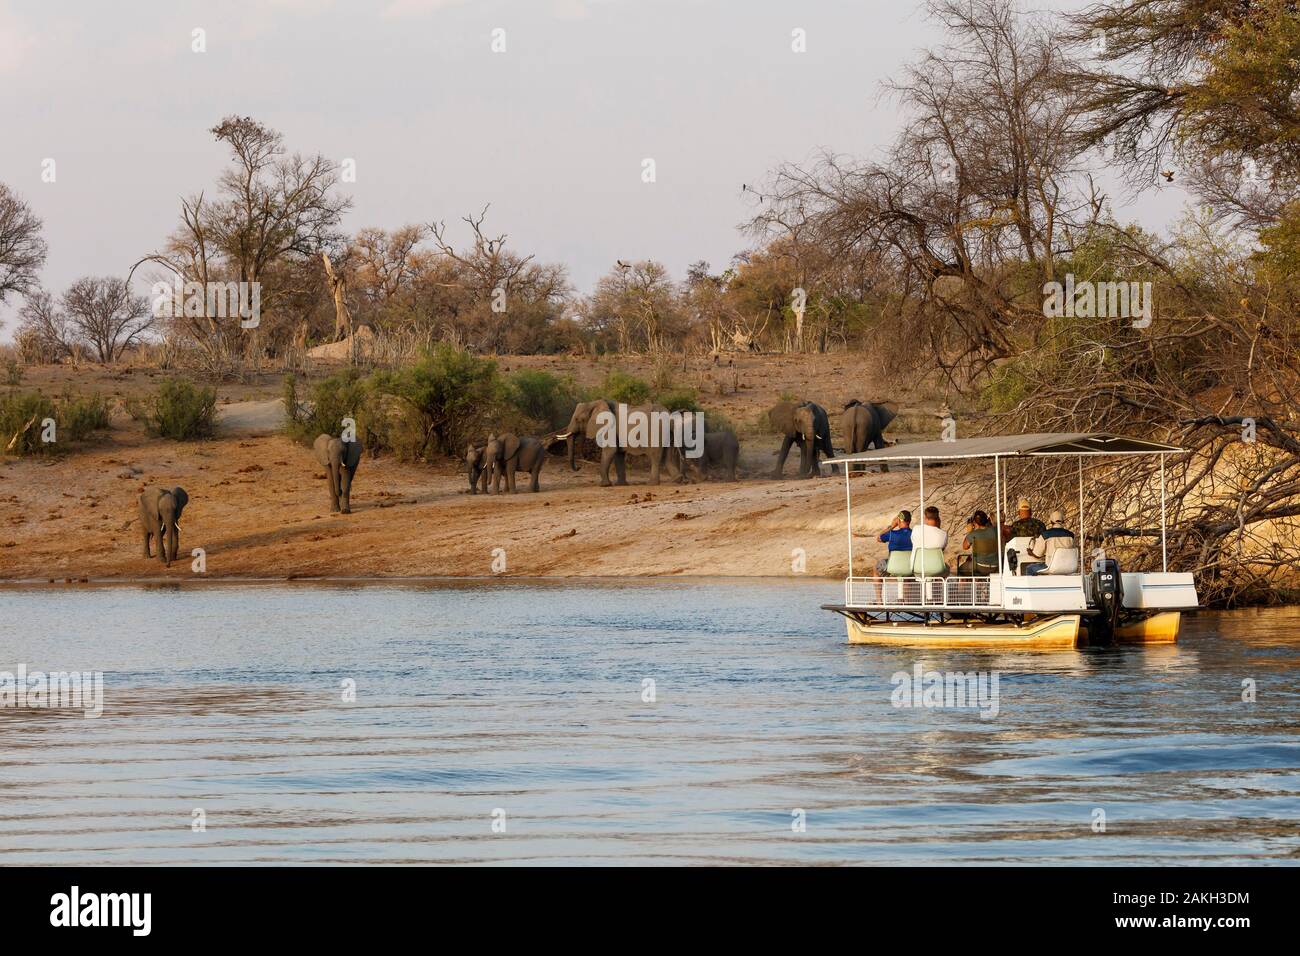 Namibia, Kavango province, Bwabwata National Park, tourists boat on the Okavango river watching elephants Stock Photo